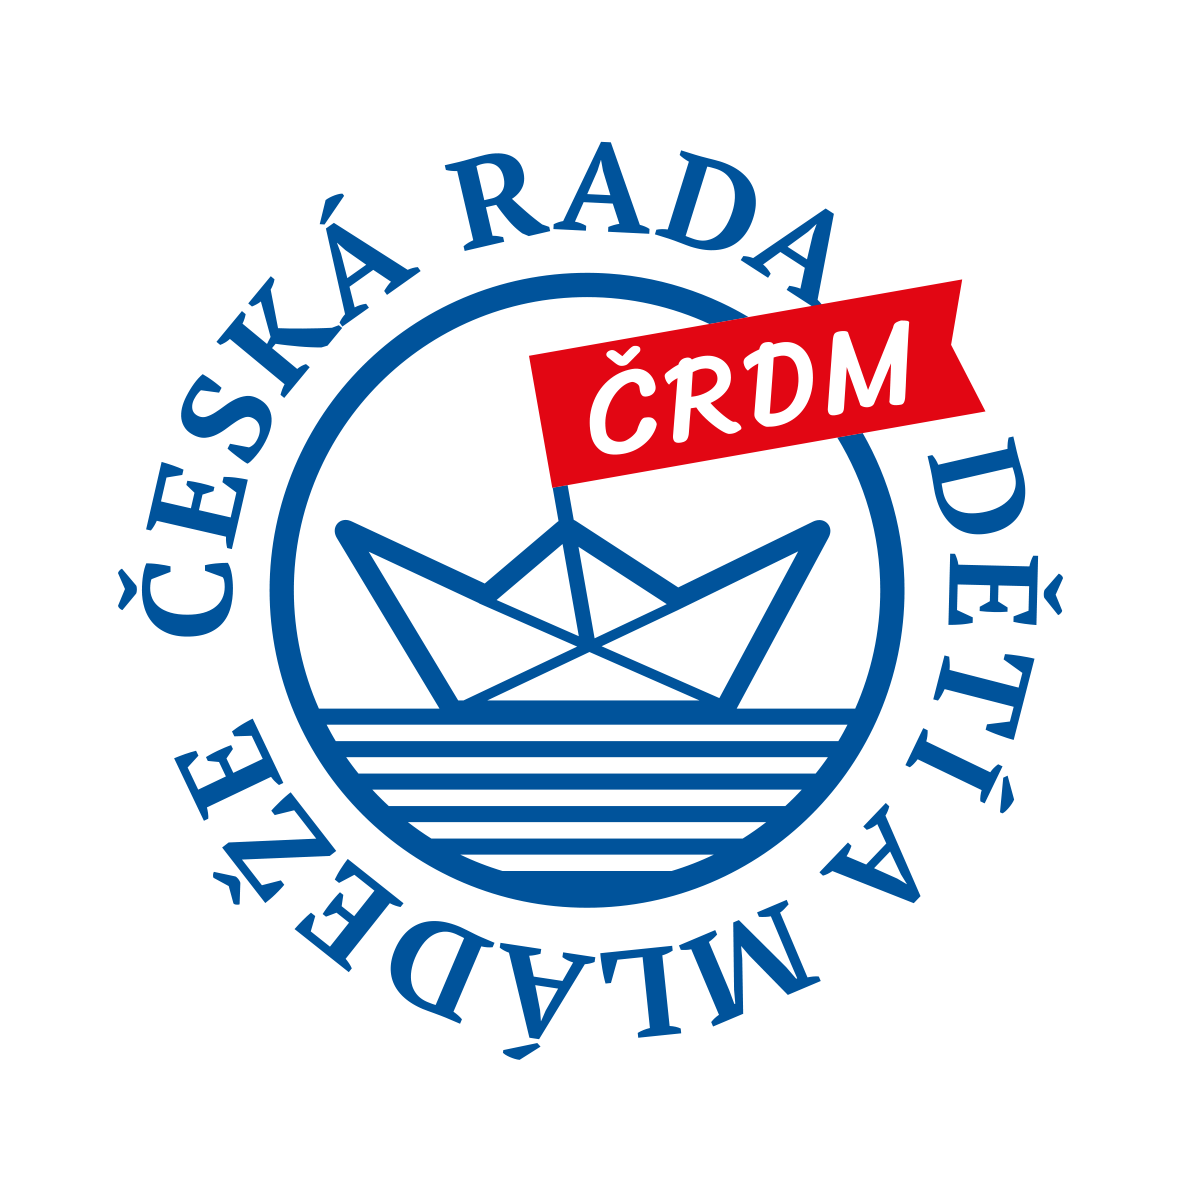 ČRDM logo